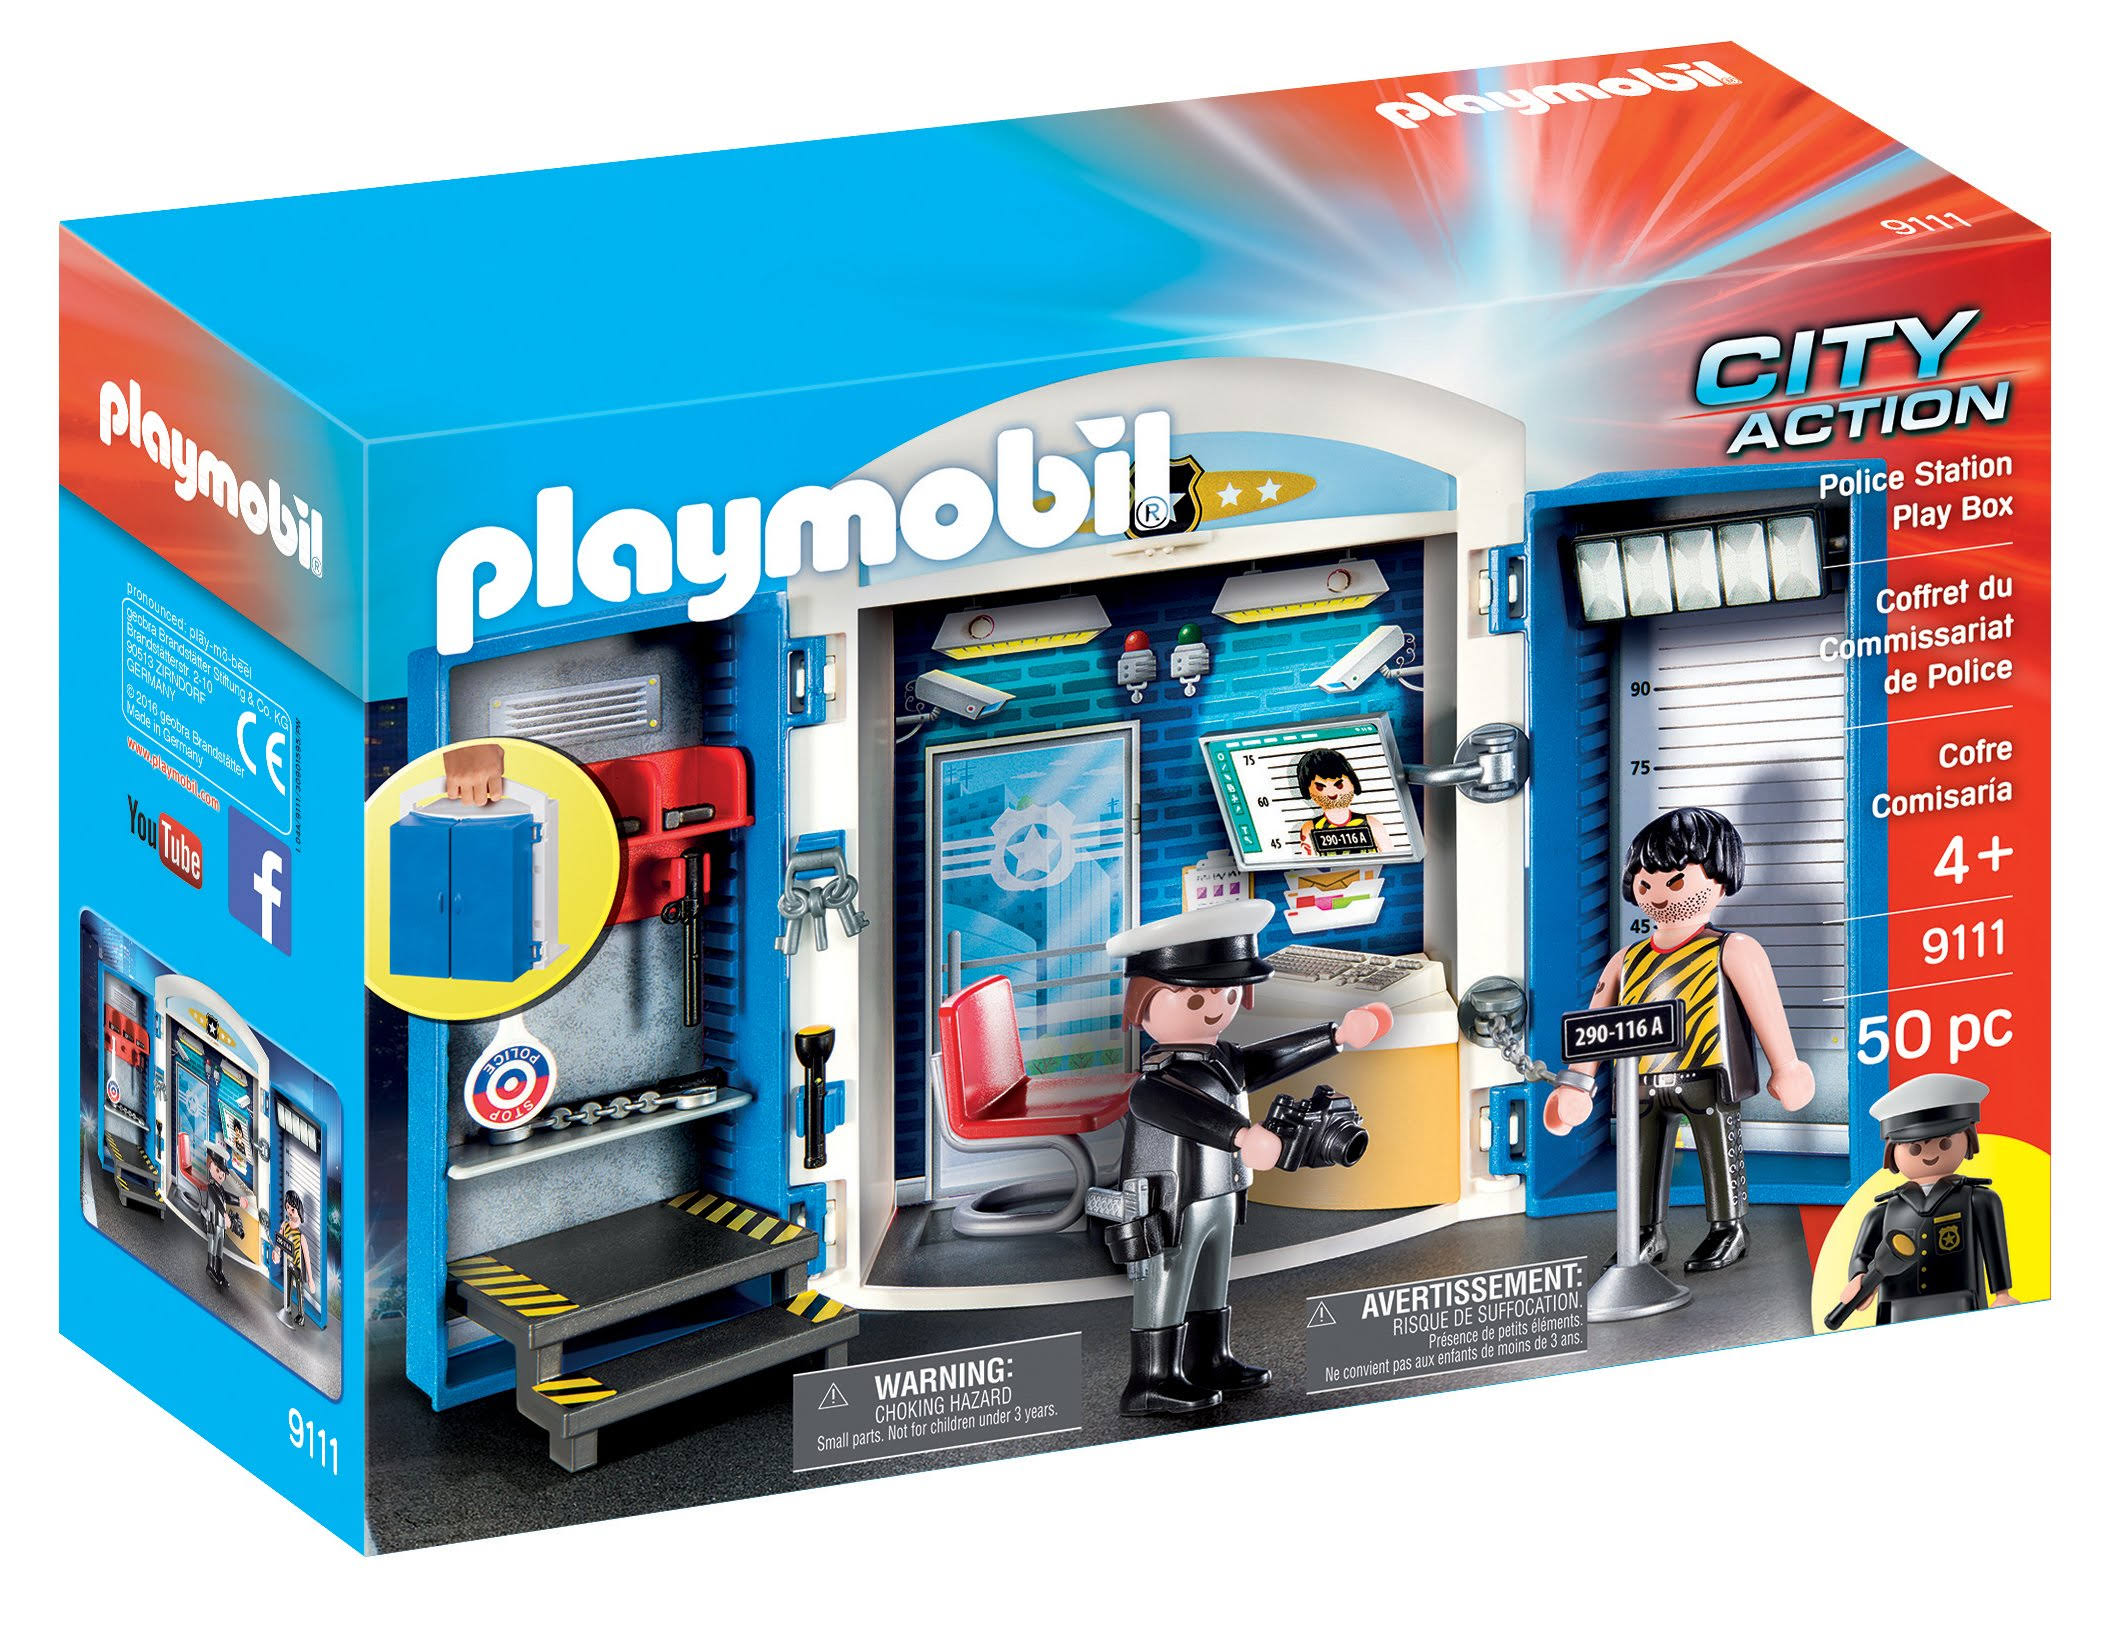 Playmobil City Action 9111 Police Station Model Kit